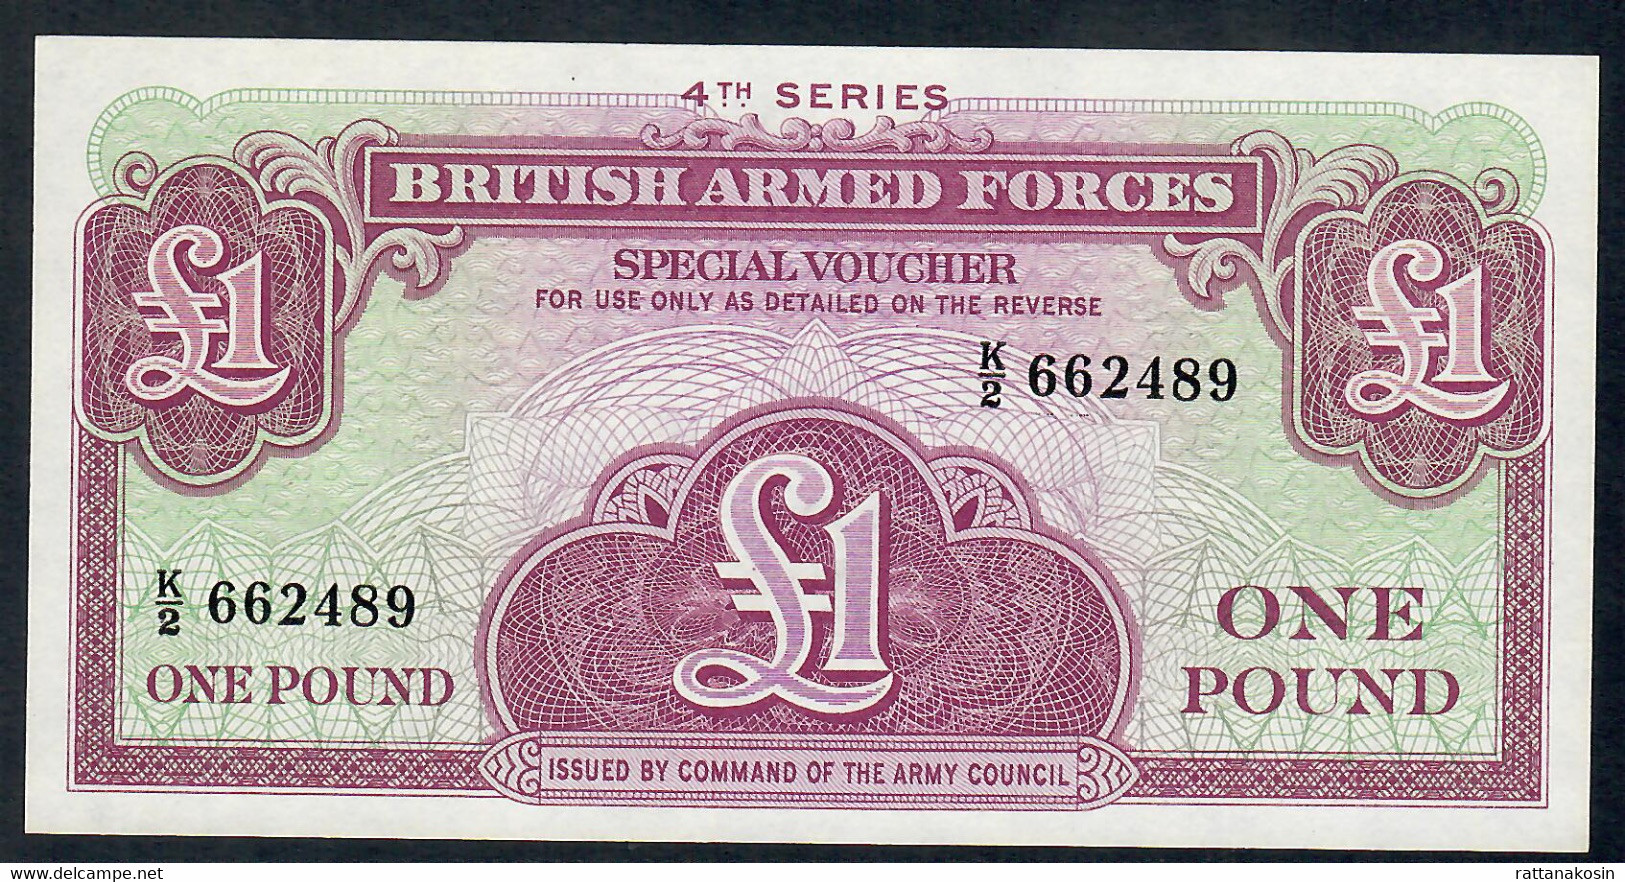 GREAT BRITAIN  PM36a 1 POUND     1962   UNC. - British Armed Forces & Special Vouchers